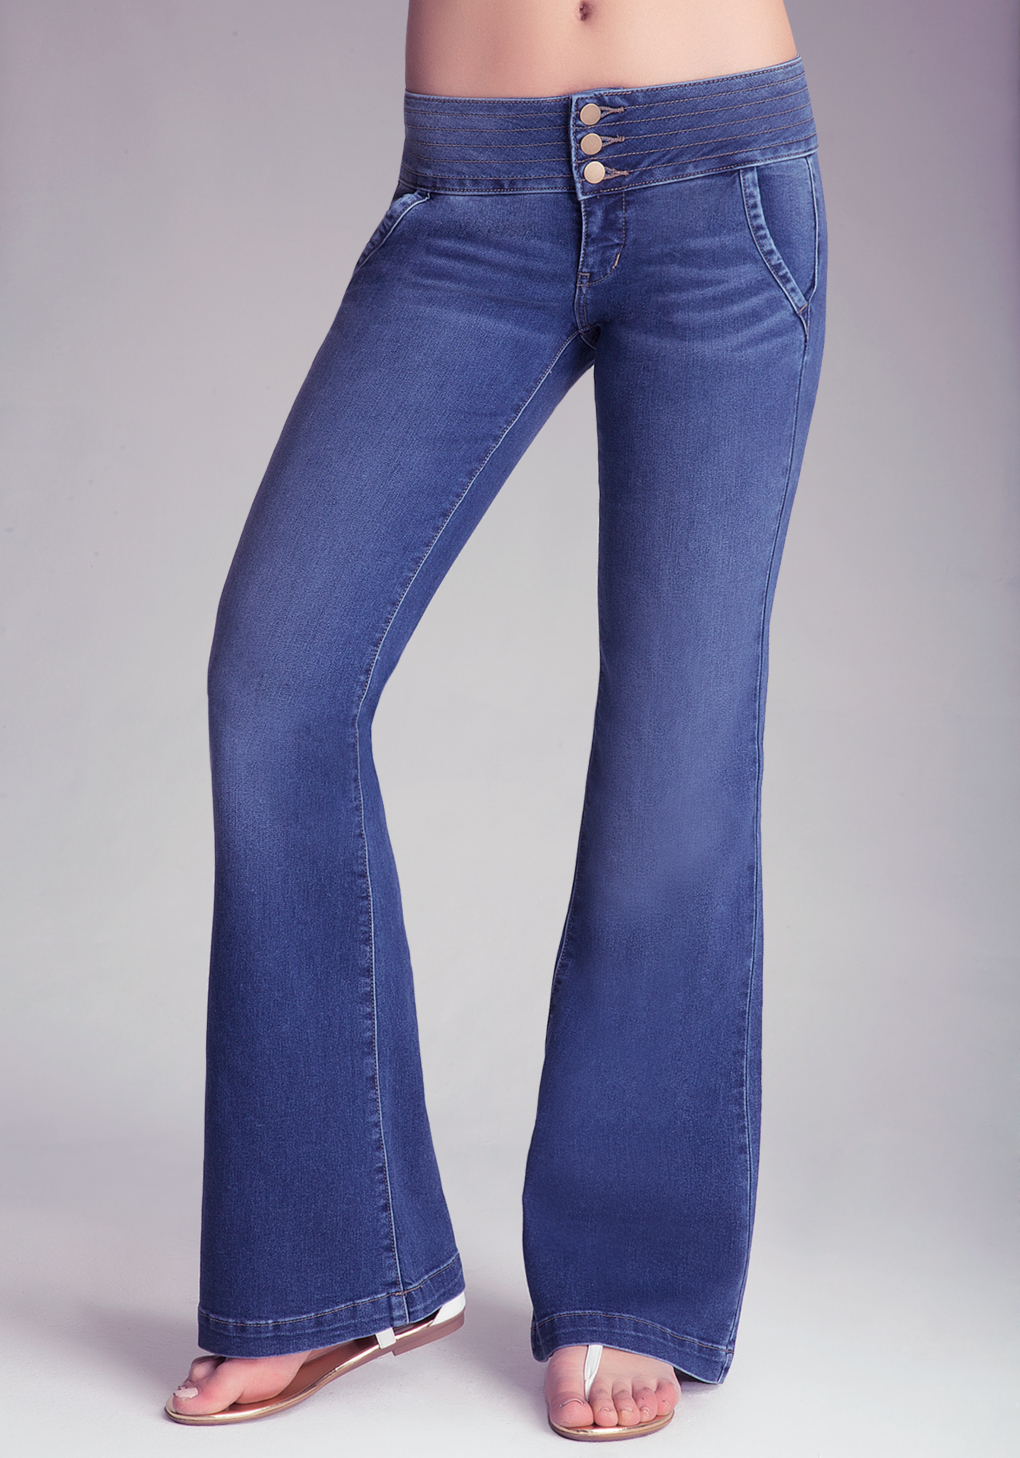 Lyst - Bebe Corset Waist Flared Jeans in Blue